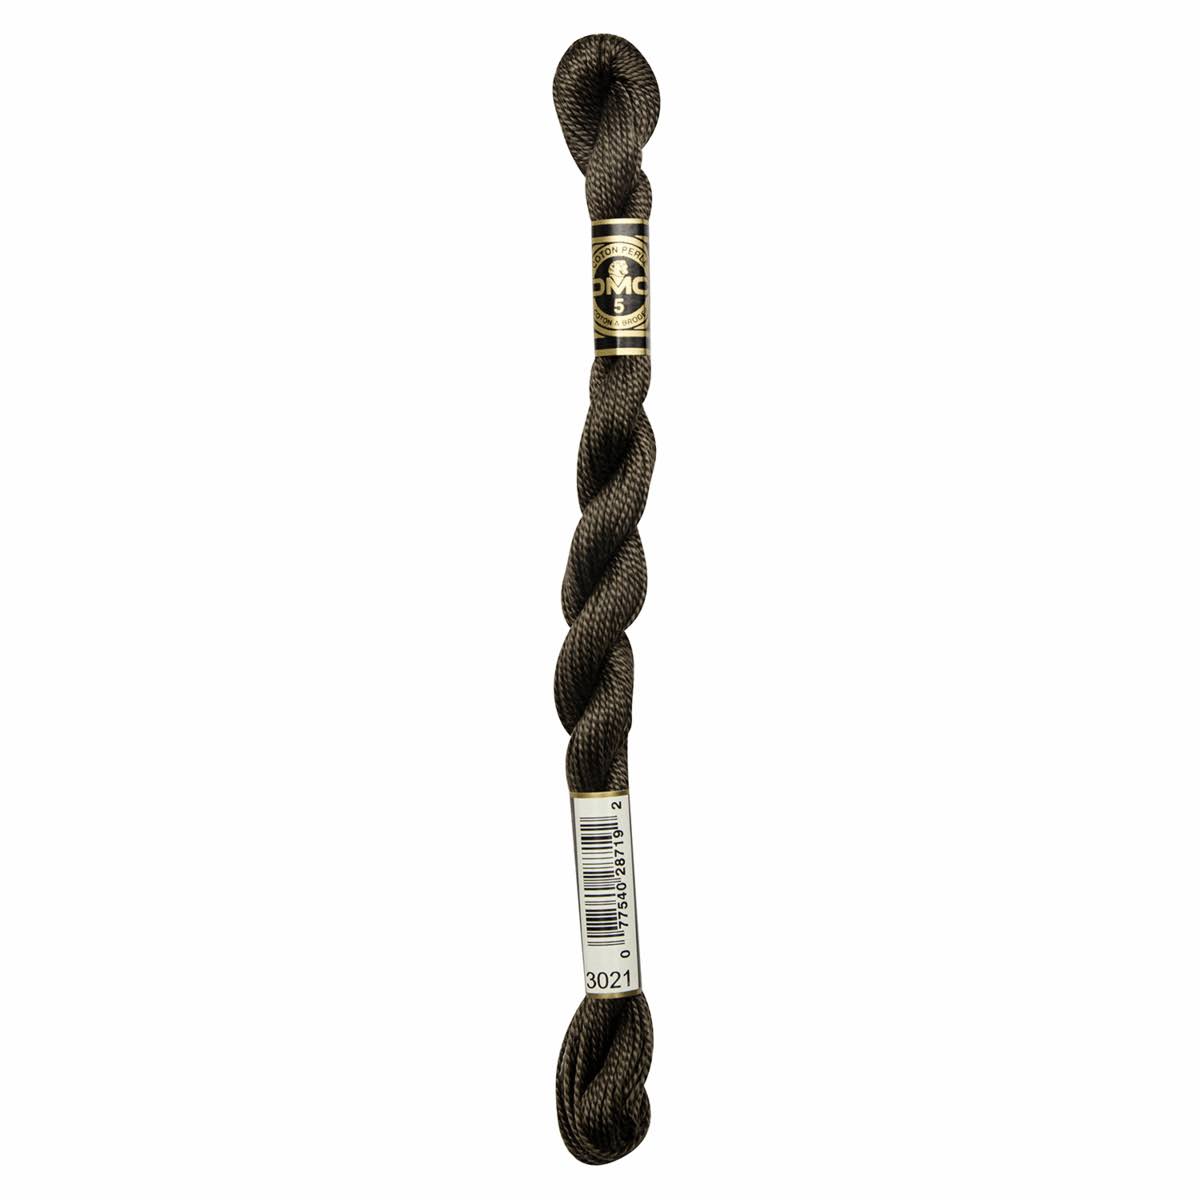 DMC 115 5-3021 Pearl Cotton Thread - Very Dark Brown Grey, Size 5